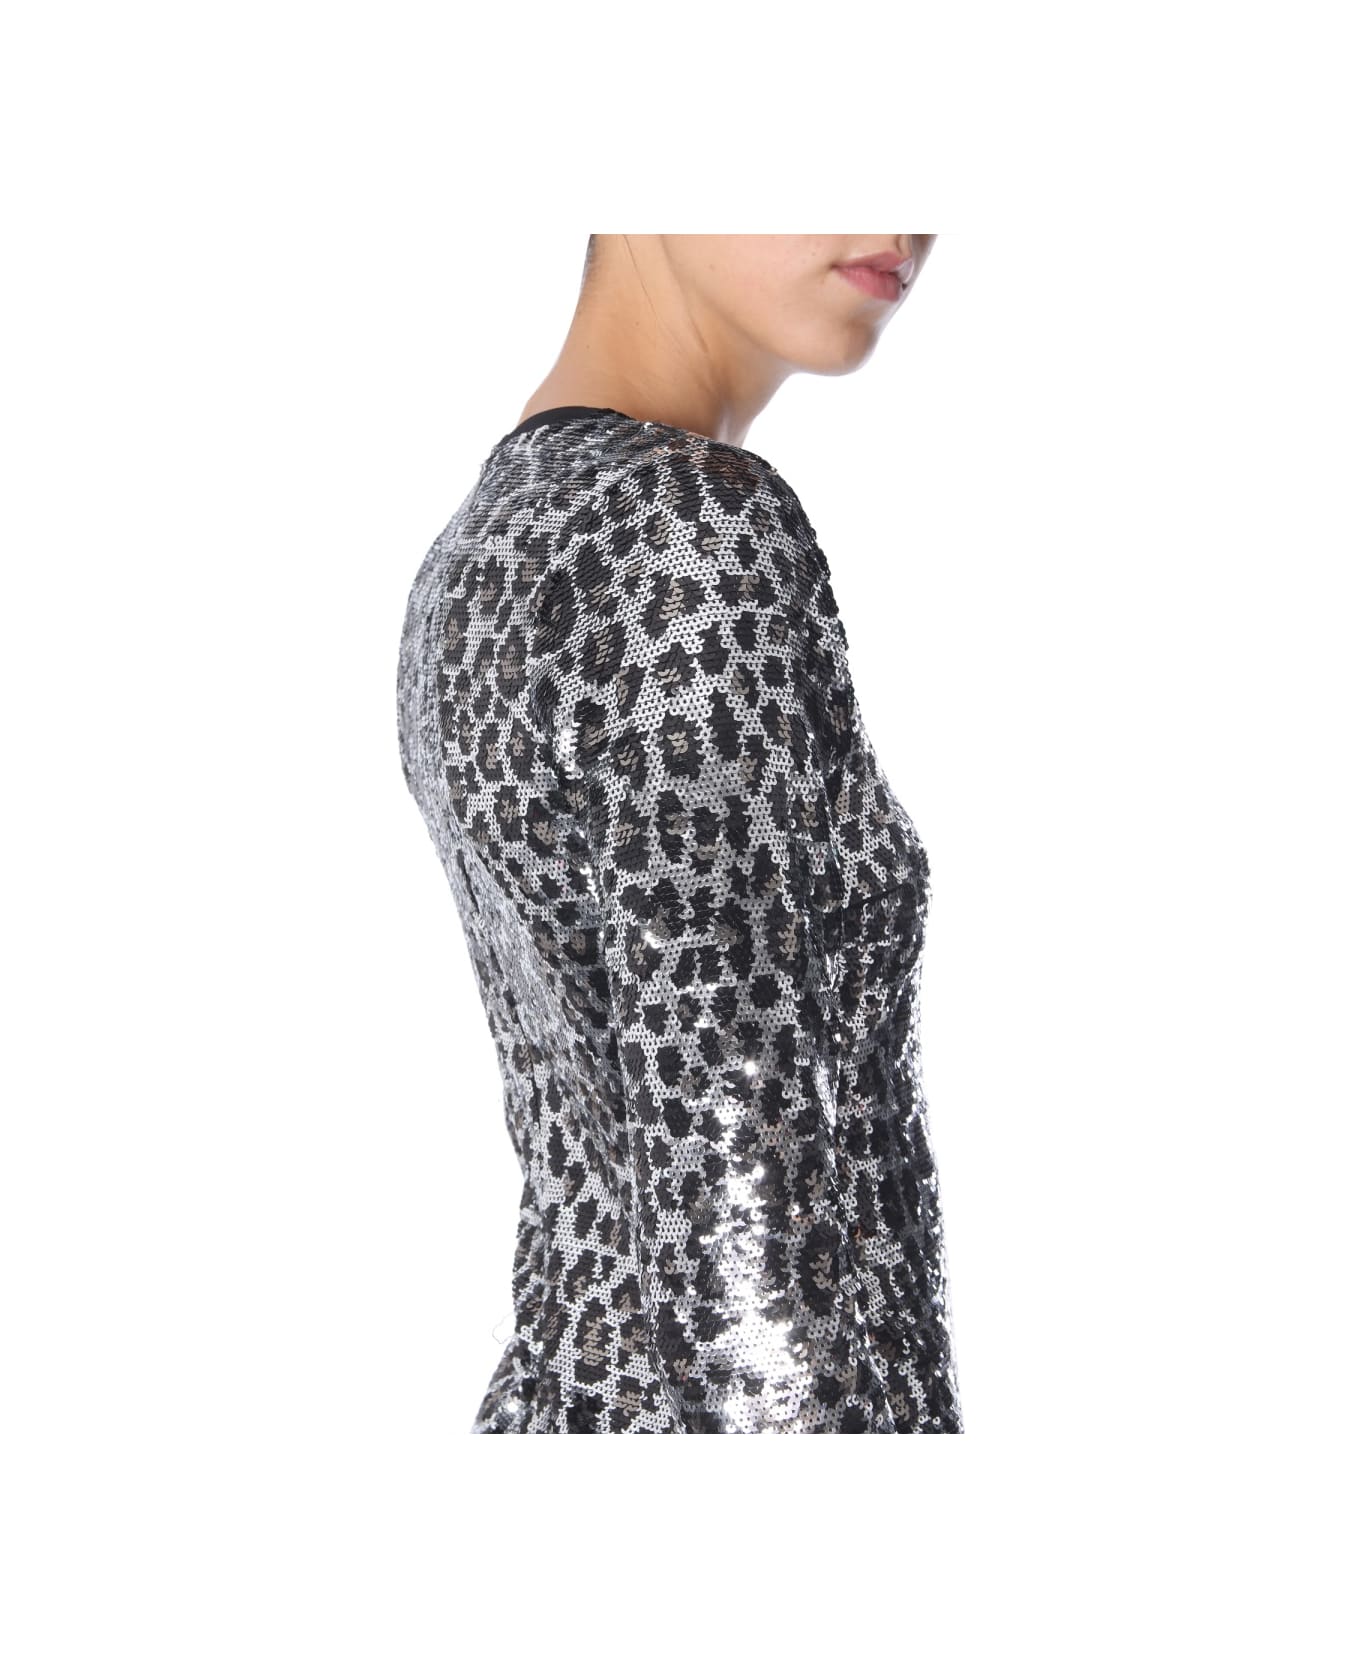 Michael Kors Leopard Dress - GREY